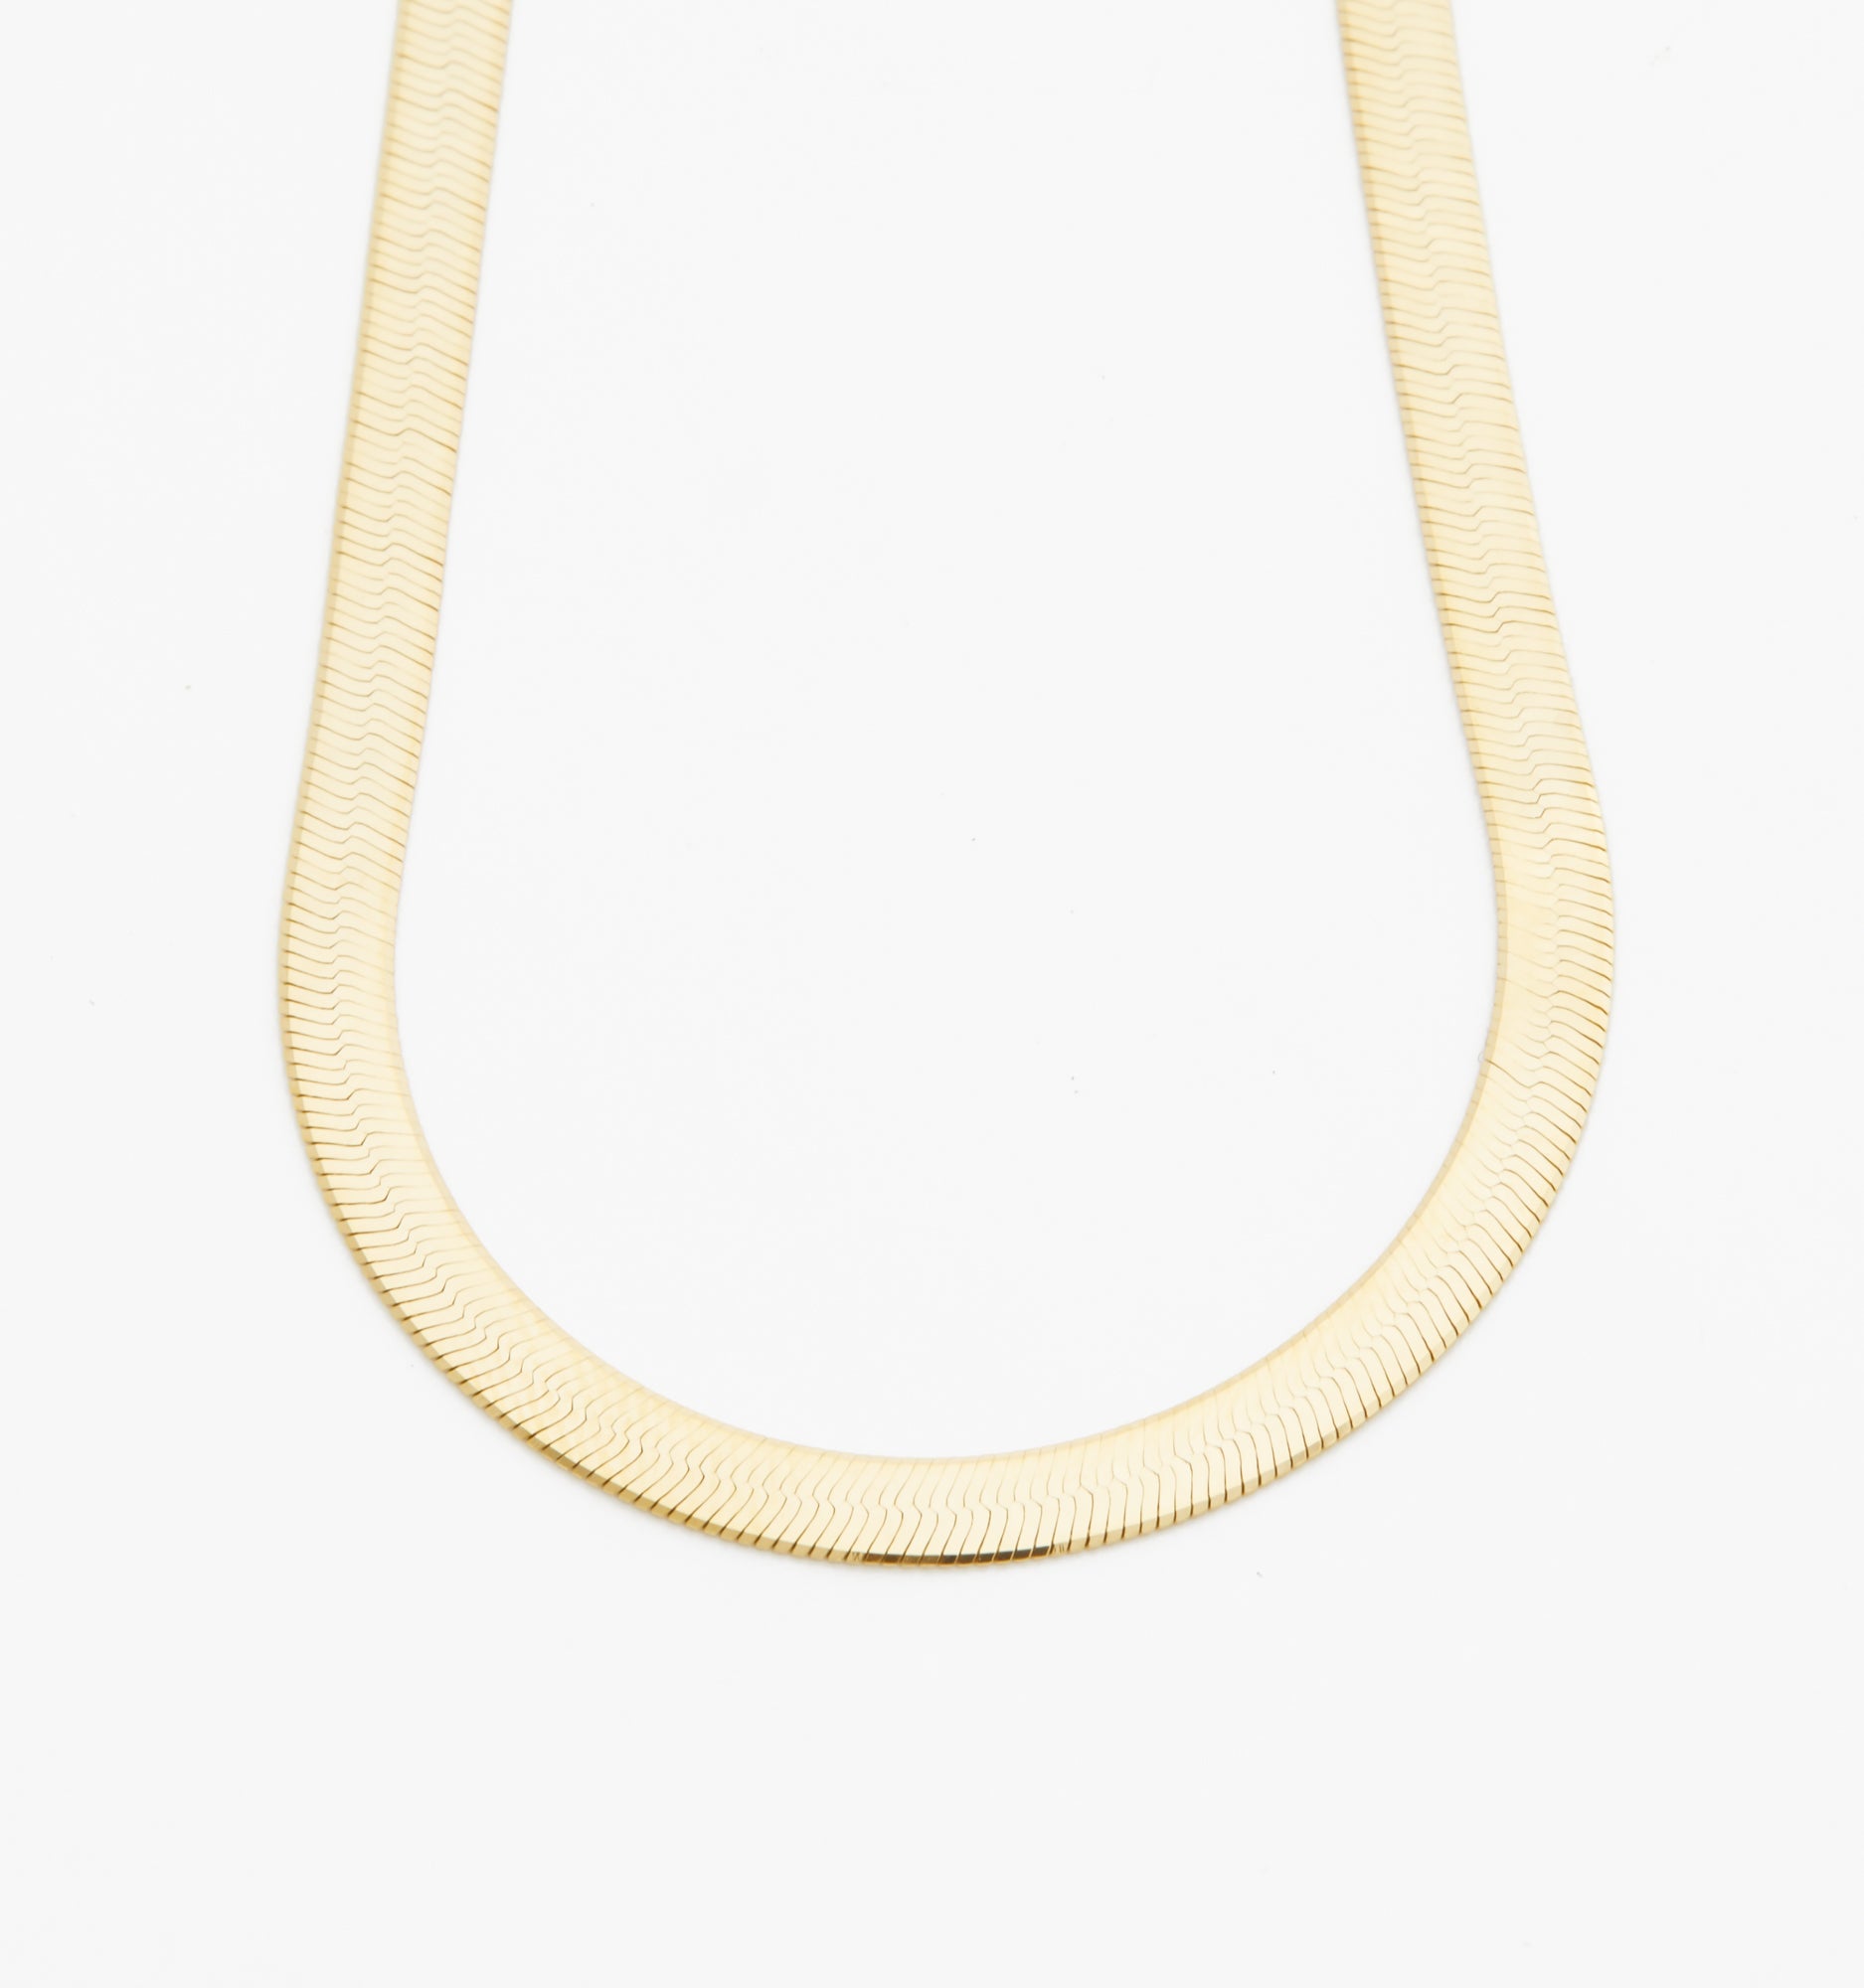 Herringbone Chain Necklace. 5mm